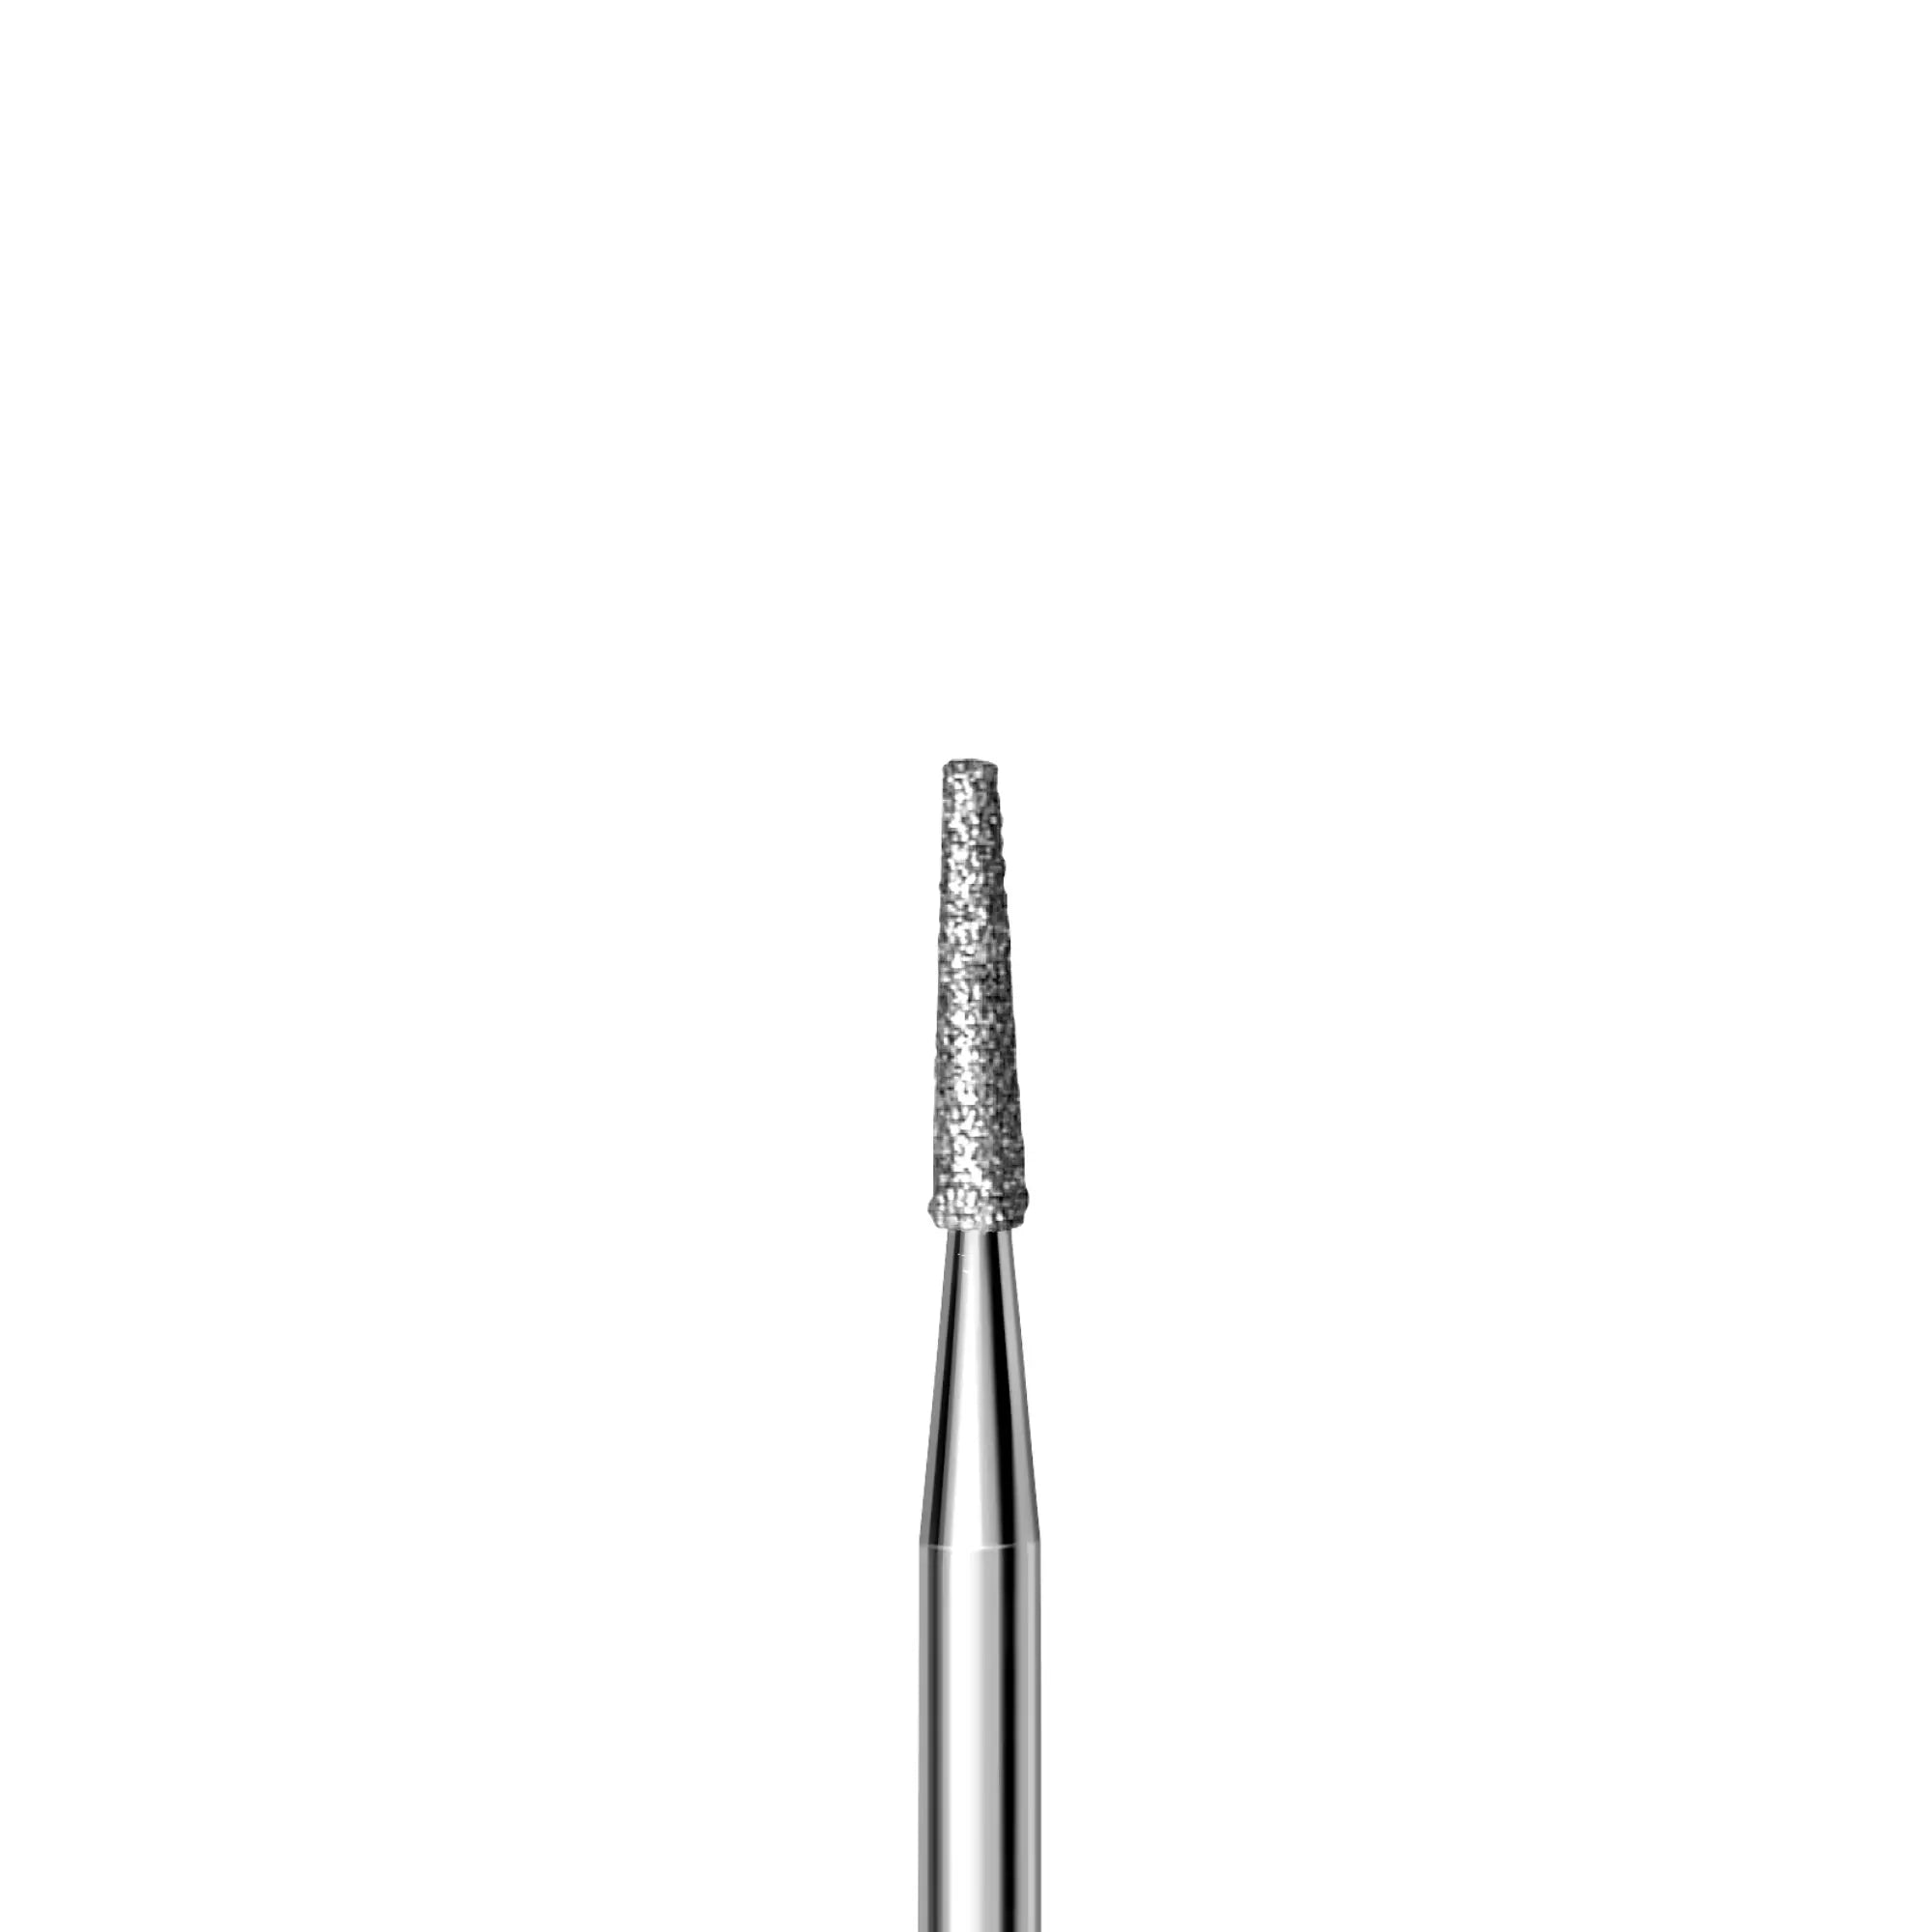 Fraise 847 Diamant - Lissage ongles et callosités - 1,8 mm Busch